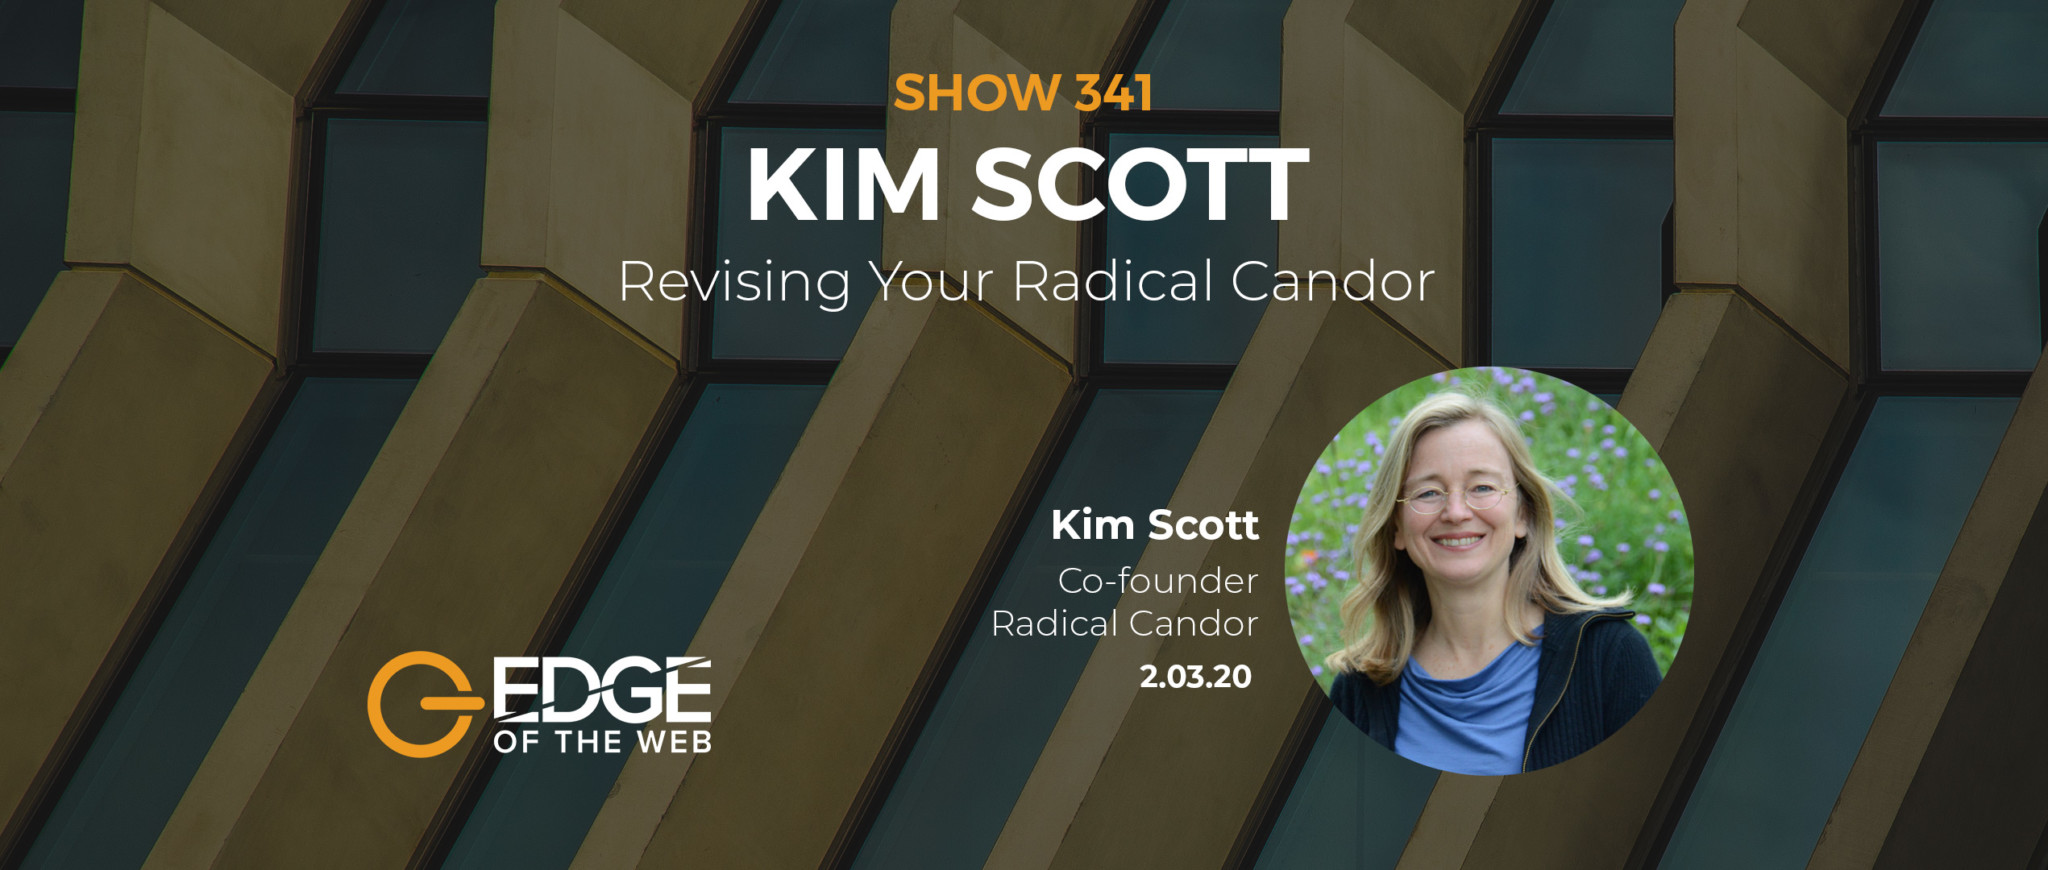 Show 341: Revising your Radical Candor, featuring Kim Scott